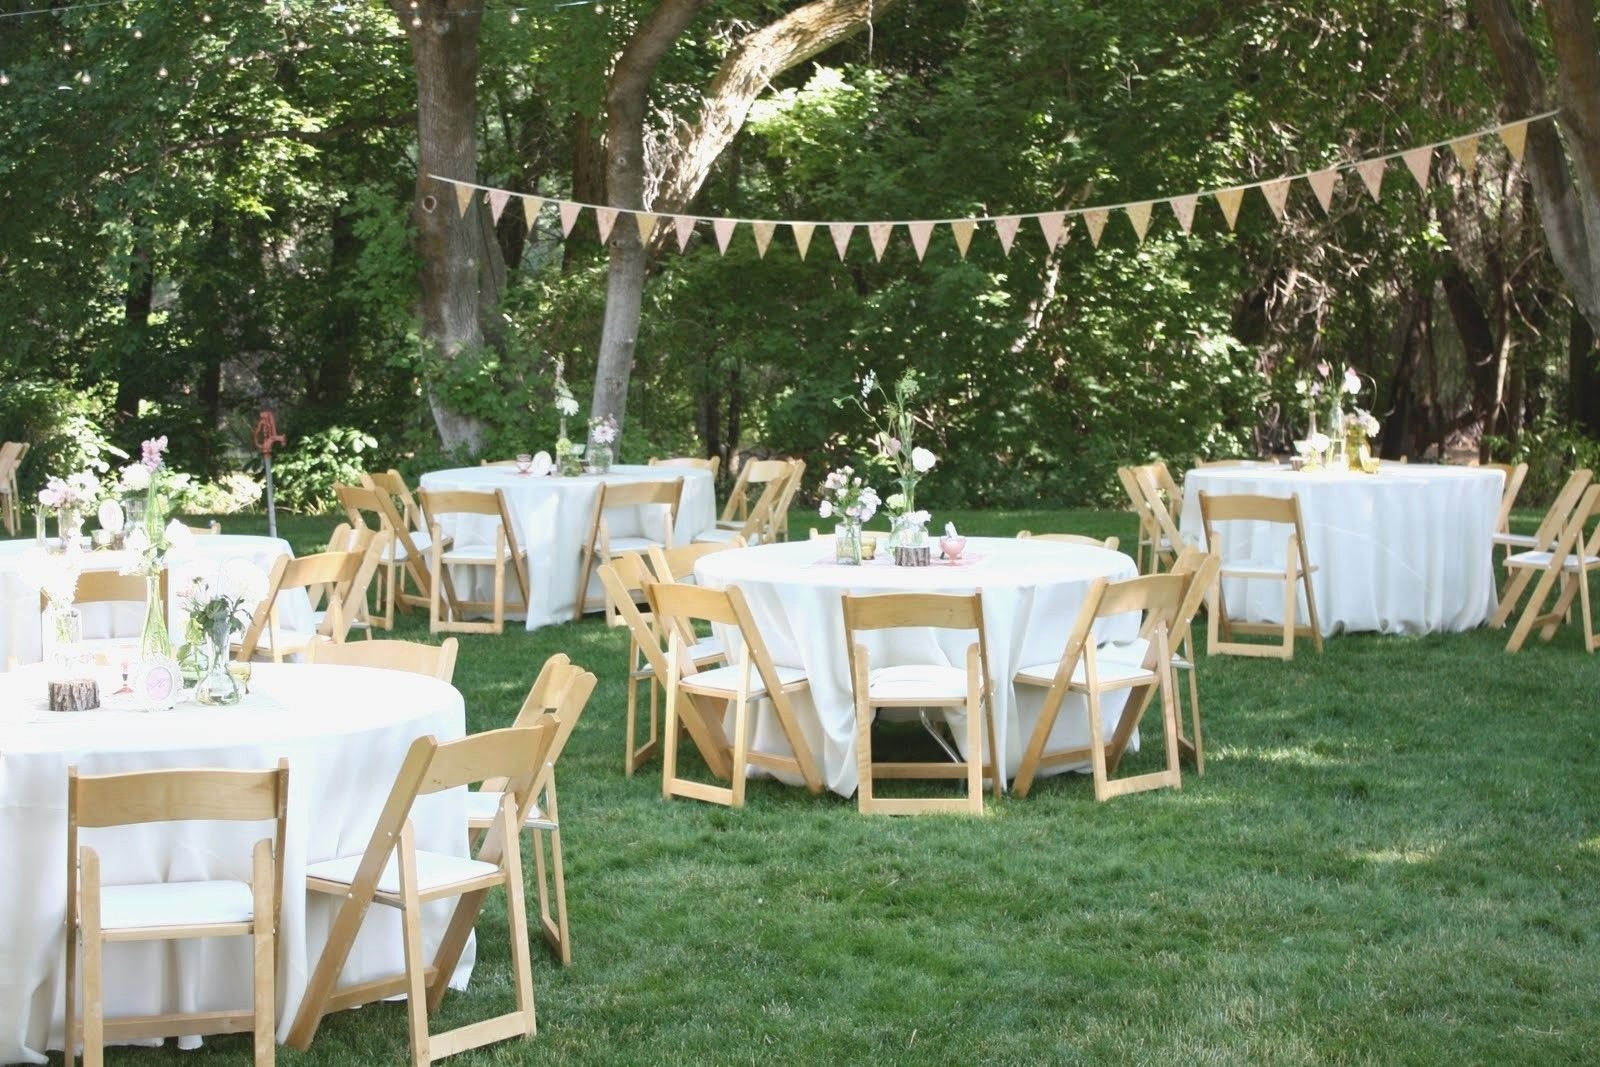 10 Wonderful Backyard Wedding Reception Ideas On A Budget fascinating outdoor backyard wedding reception ideas new image of 2022